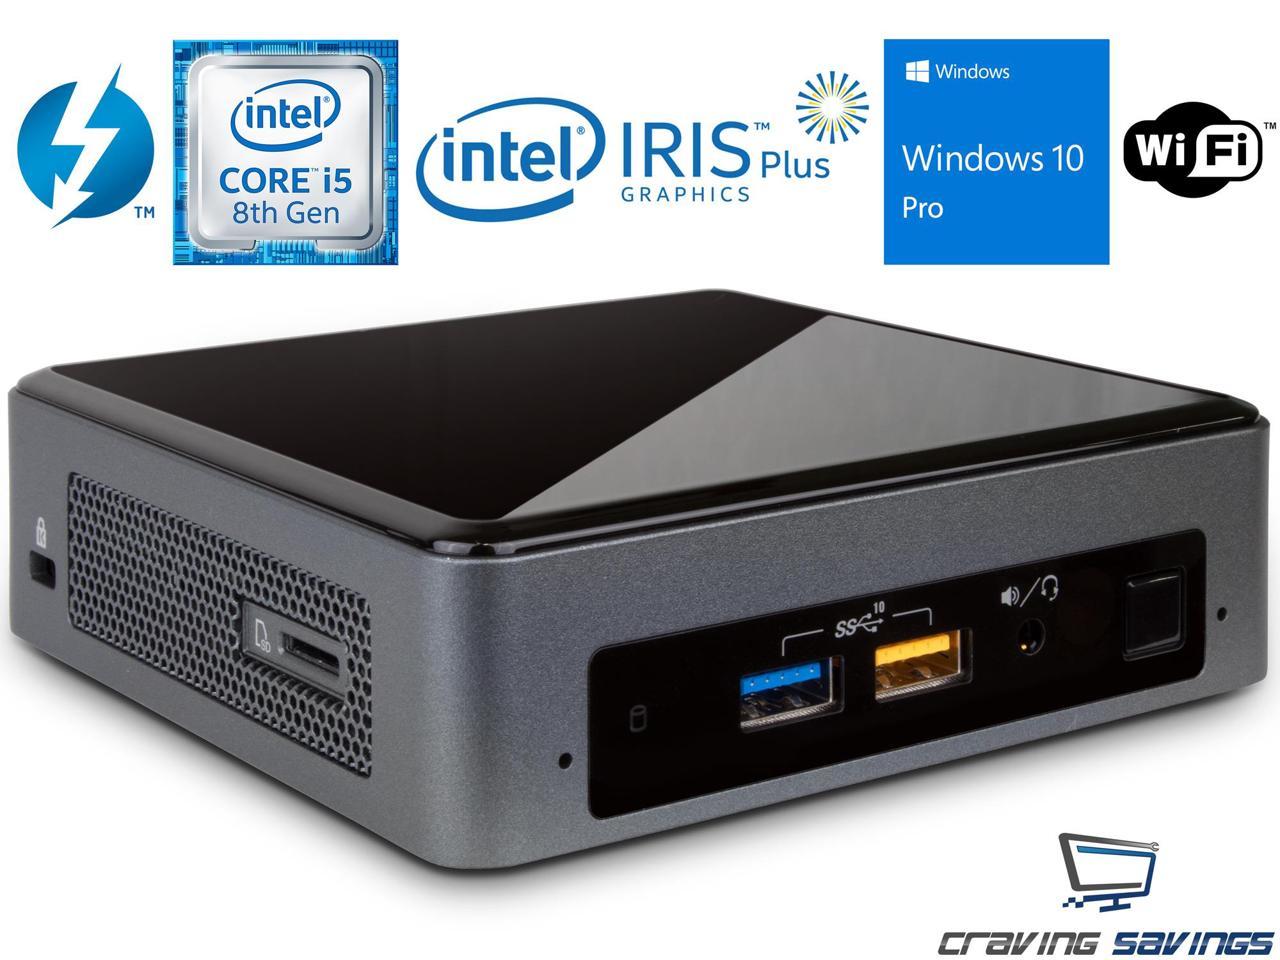 Intel NUC8i5BEK Mini PC/HTPC, Intel Core i5-8259U Up to 3.8GHz, 8GB DDR4, 256GB SSD, Wifi, Bluetooth 5.0, 4K Support, Dual Monitor Capable, Windows 10 Pro